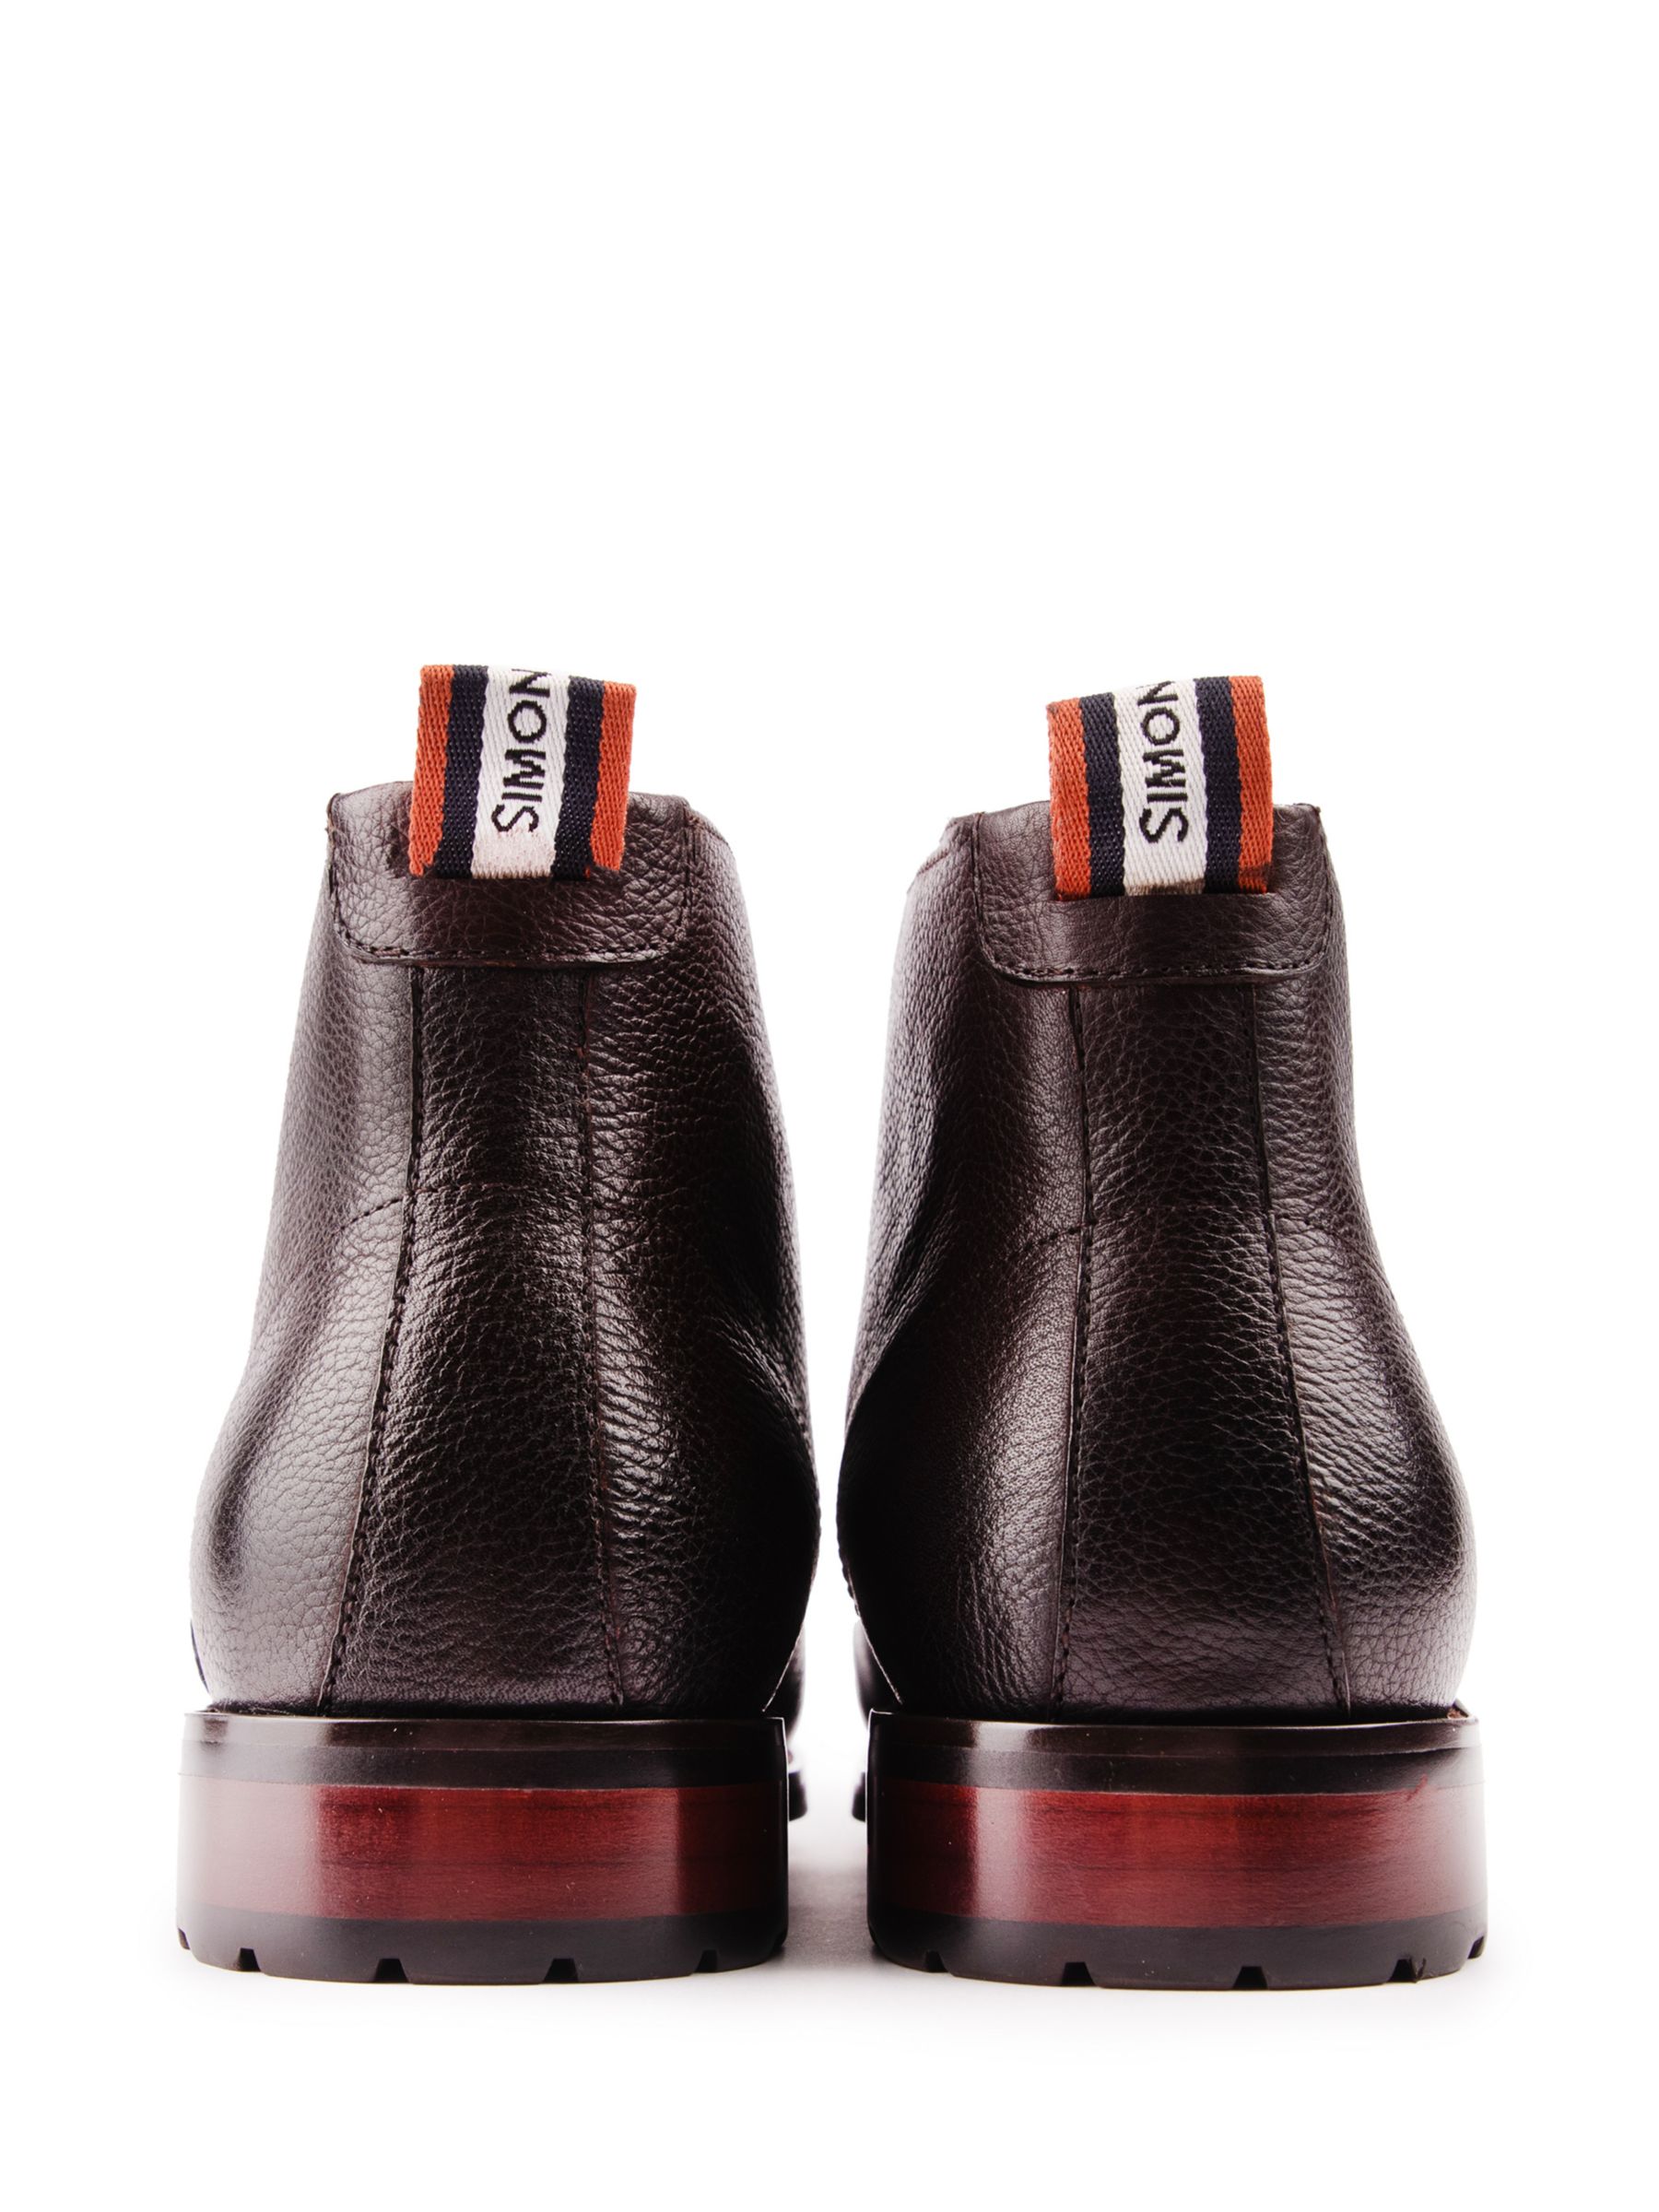 Simon Carter Daisy Leather Chukka Boots, Brown, 11.5